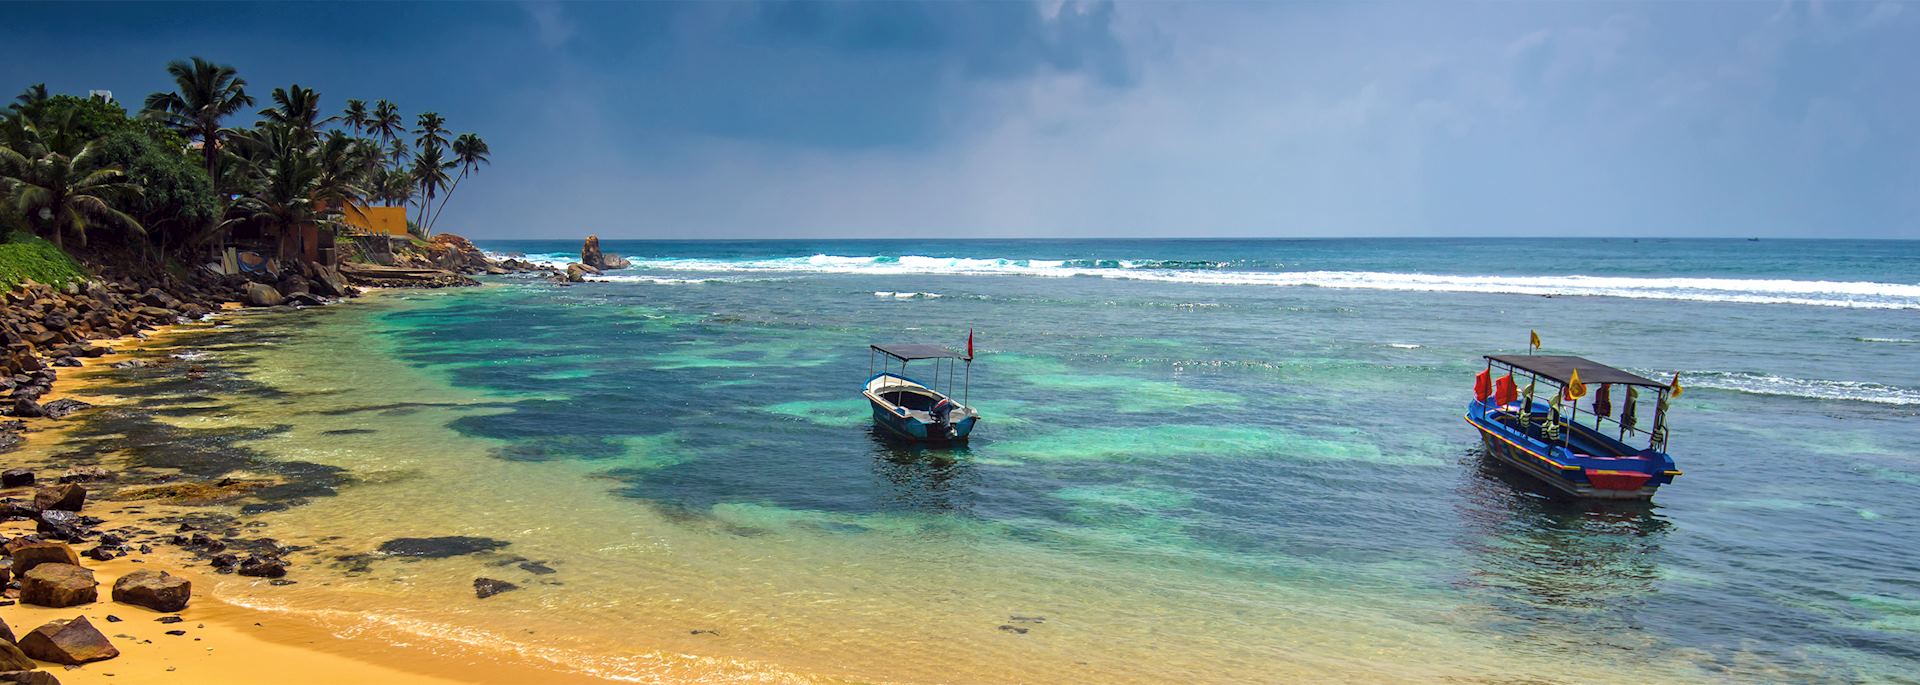 Enjoy Sri Lanka's beaches